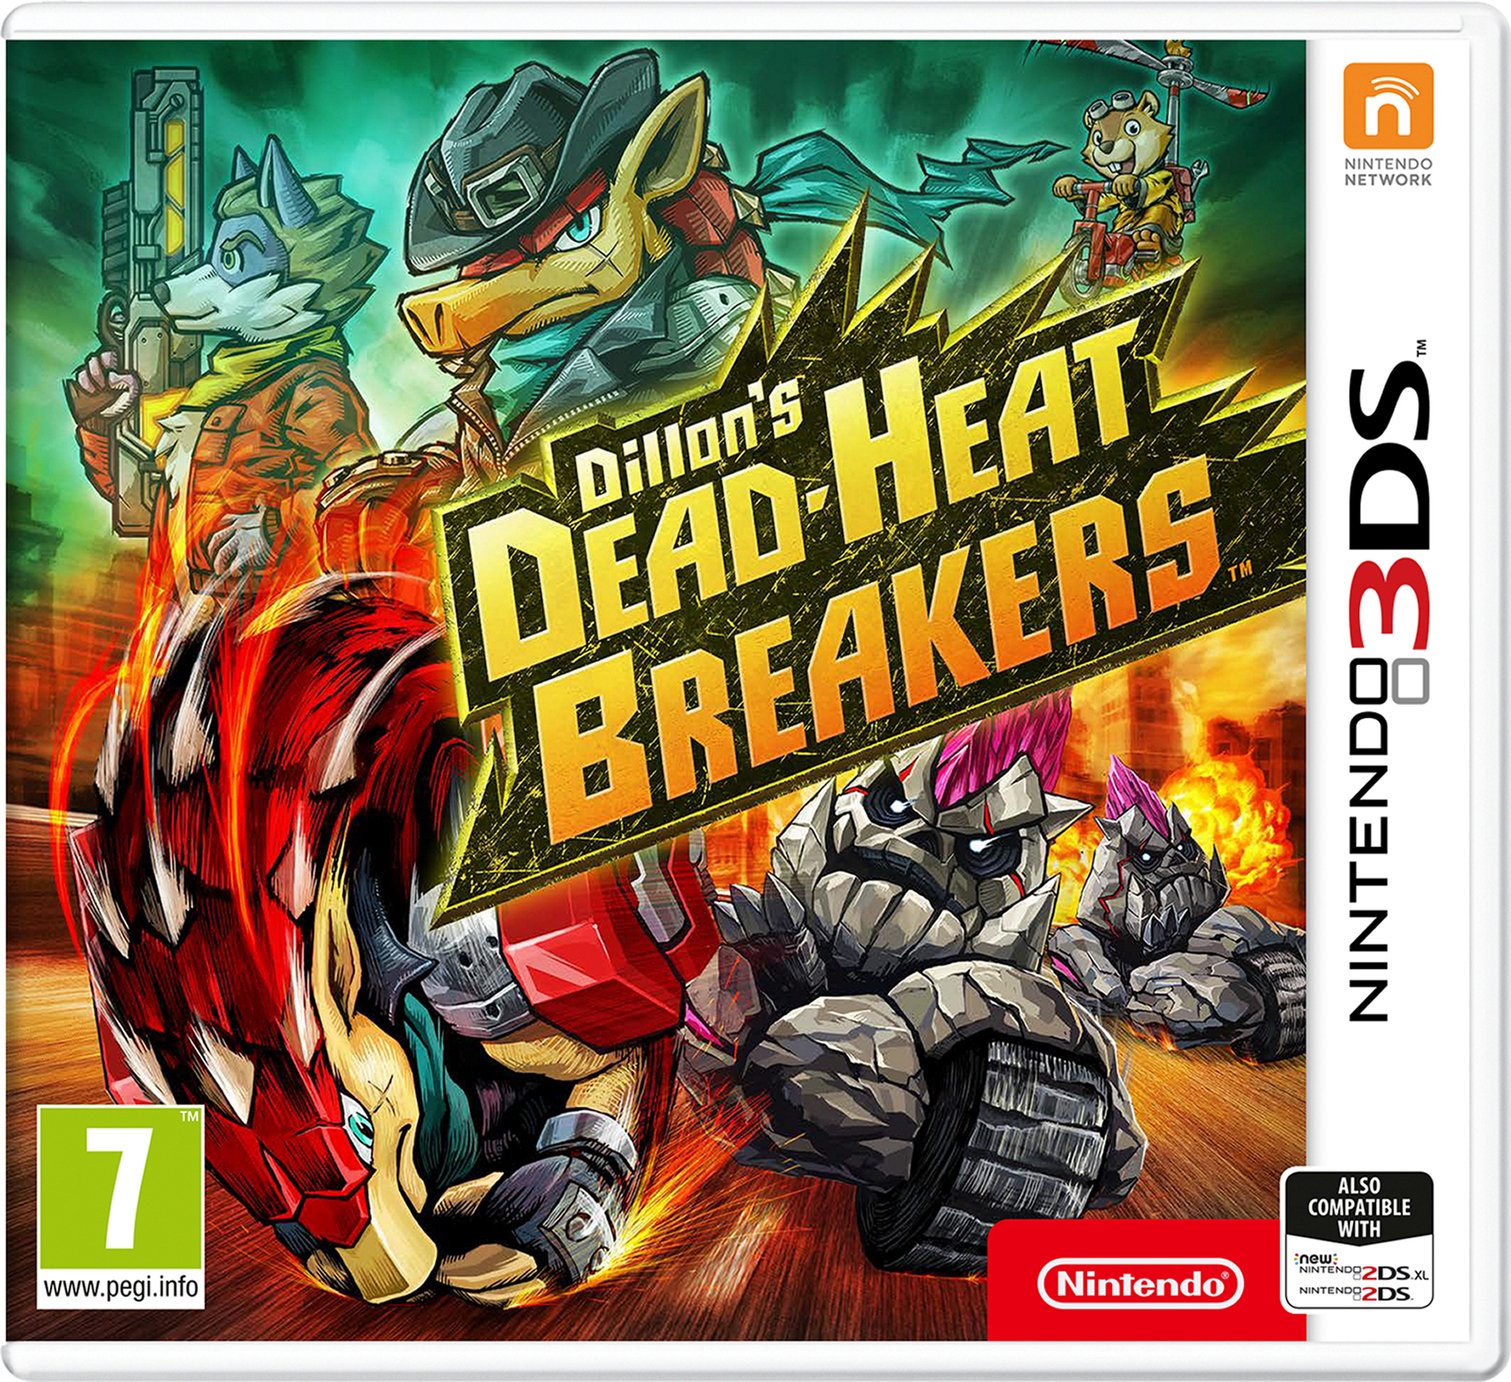 Dillon's Dead-Heat Breakers Nintendo 3DS Game Review